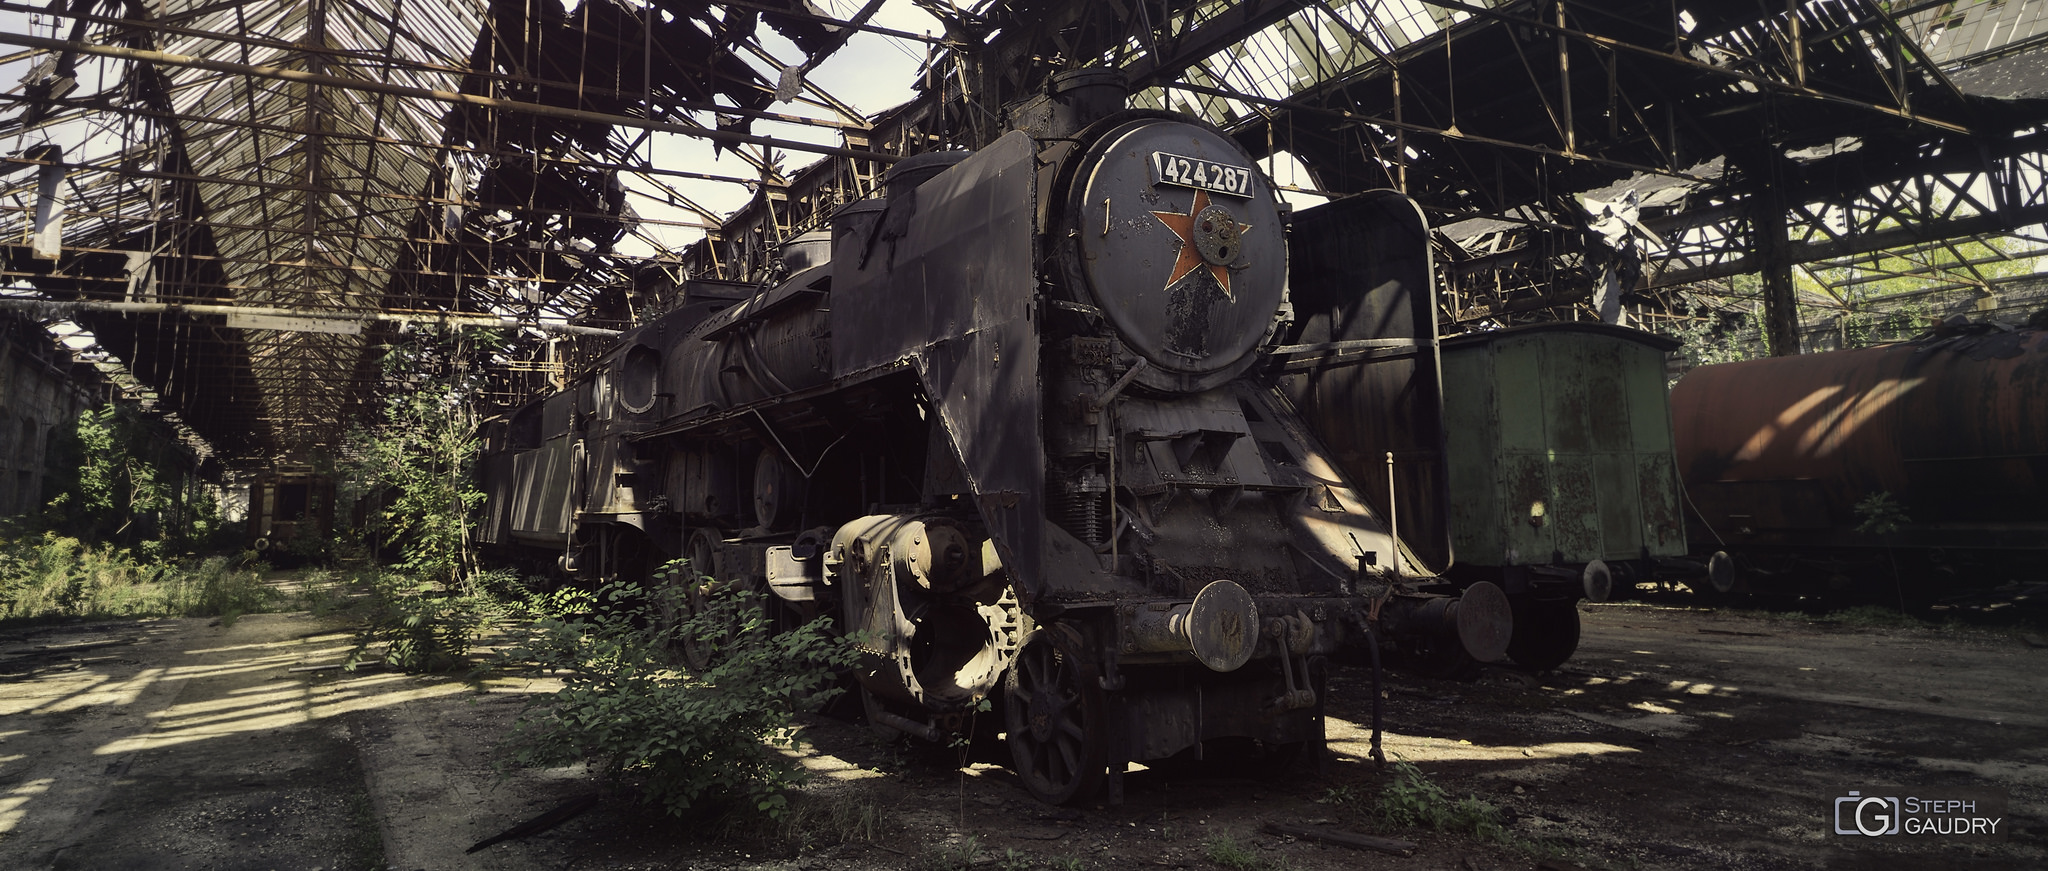 MÁV 424-287 (Abandoned Red star train) [Klik om de diavoorstelling te starten]